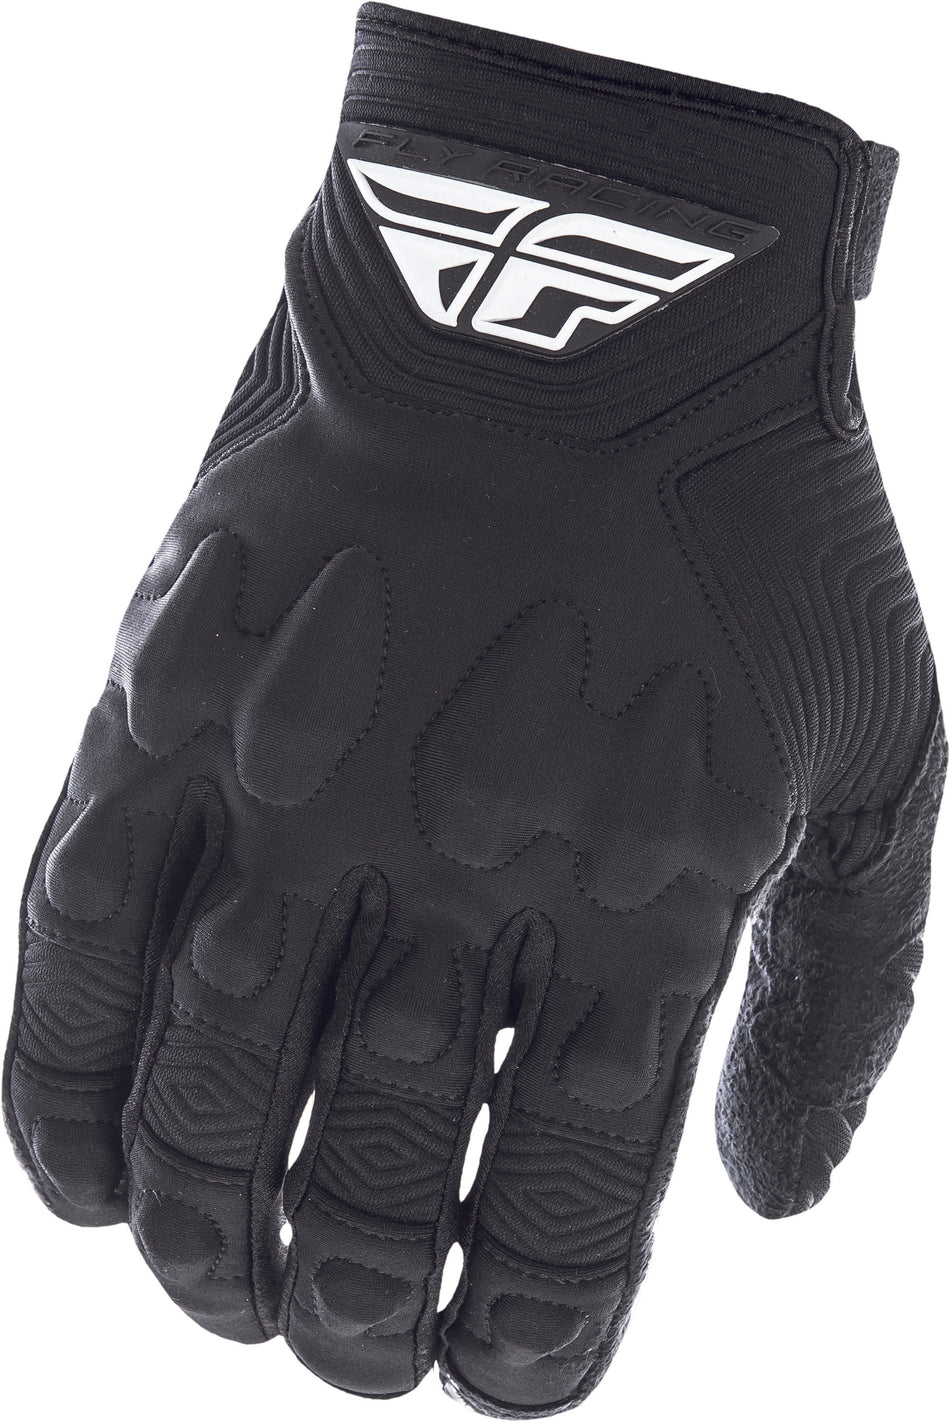 FLY RACING Patrol Xc Lite Gloves Black Sz 13 370-67013